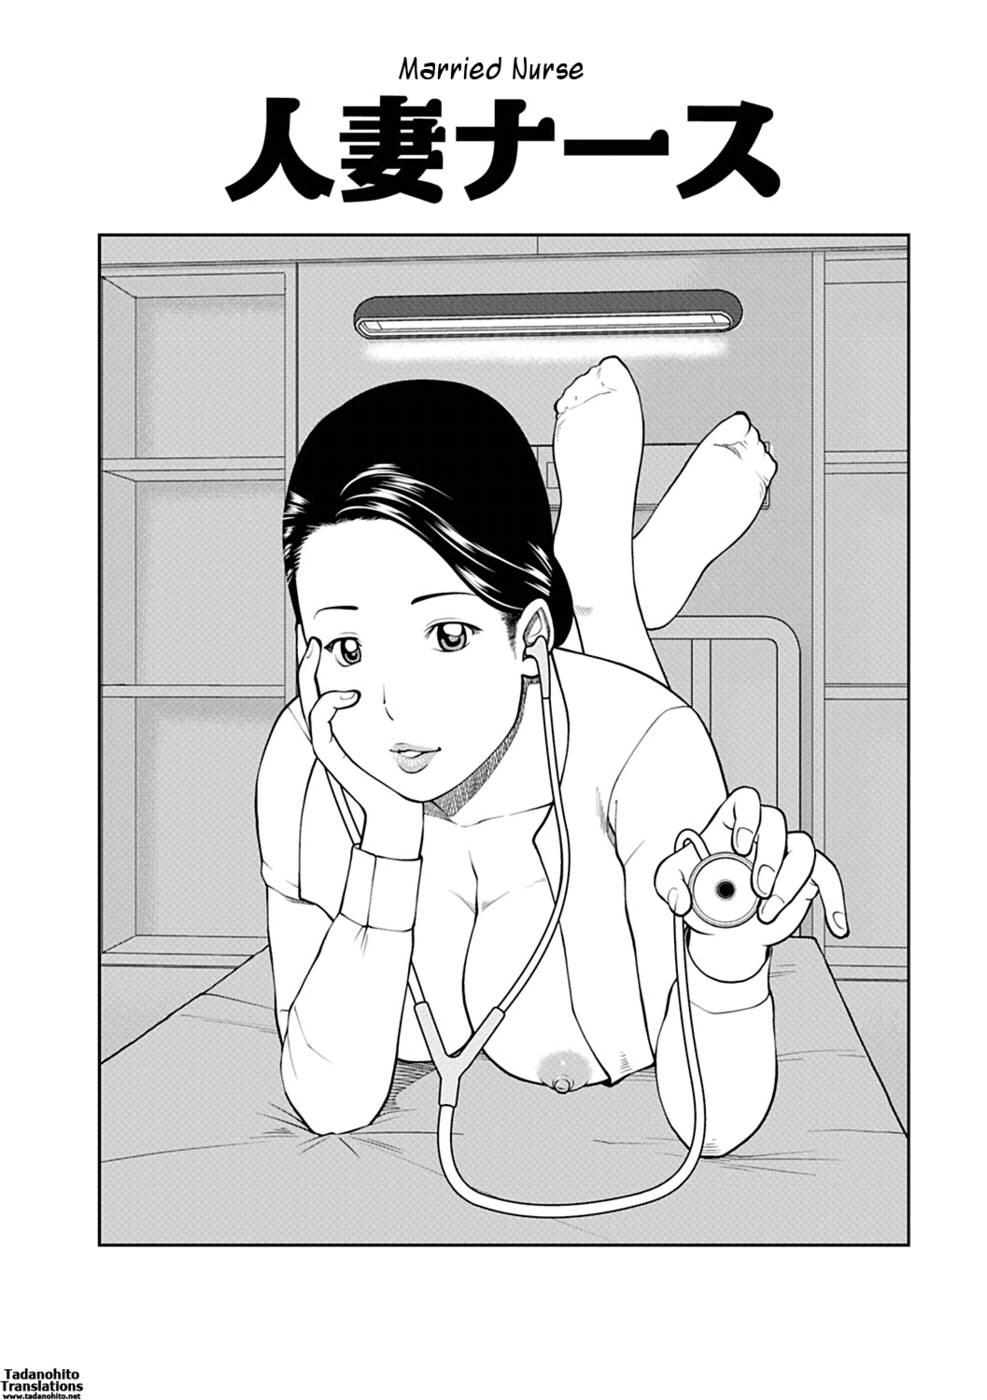 Hentai Manga Comic-34 Year Old Unsatisfied Wife-Chapter 5-Married Nurse-1